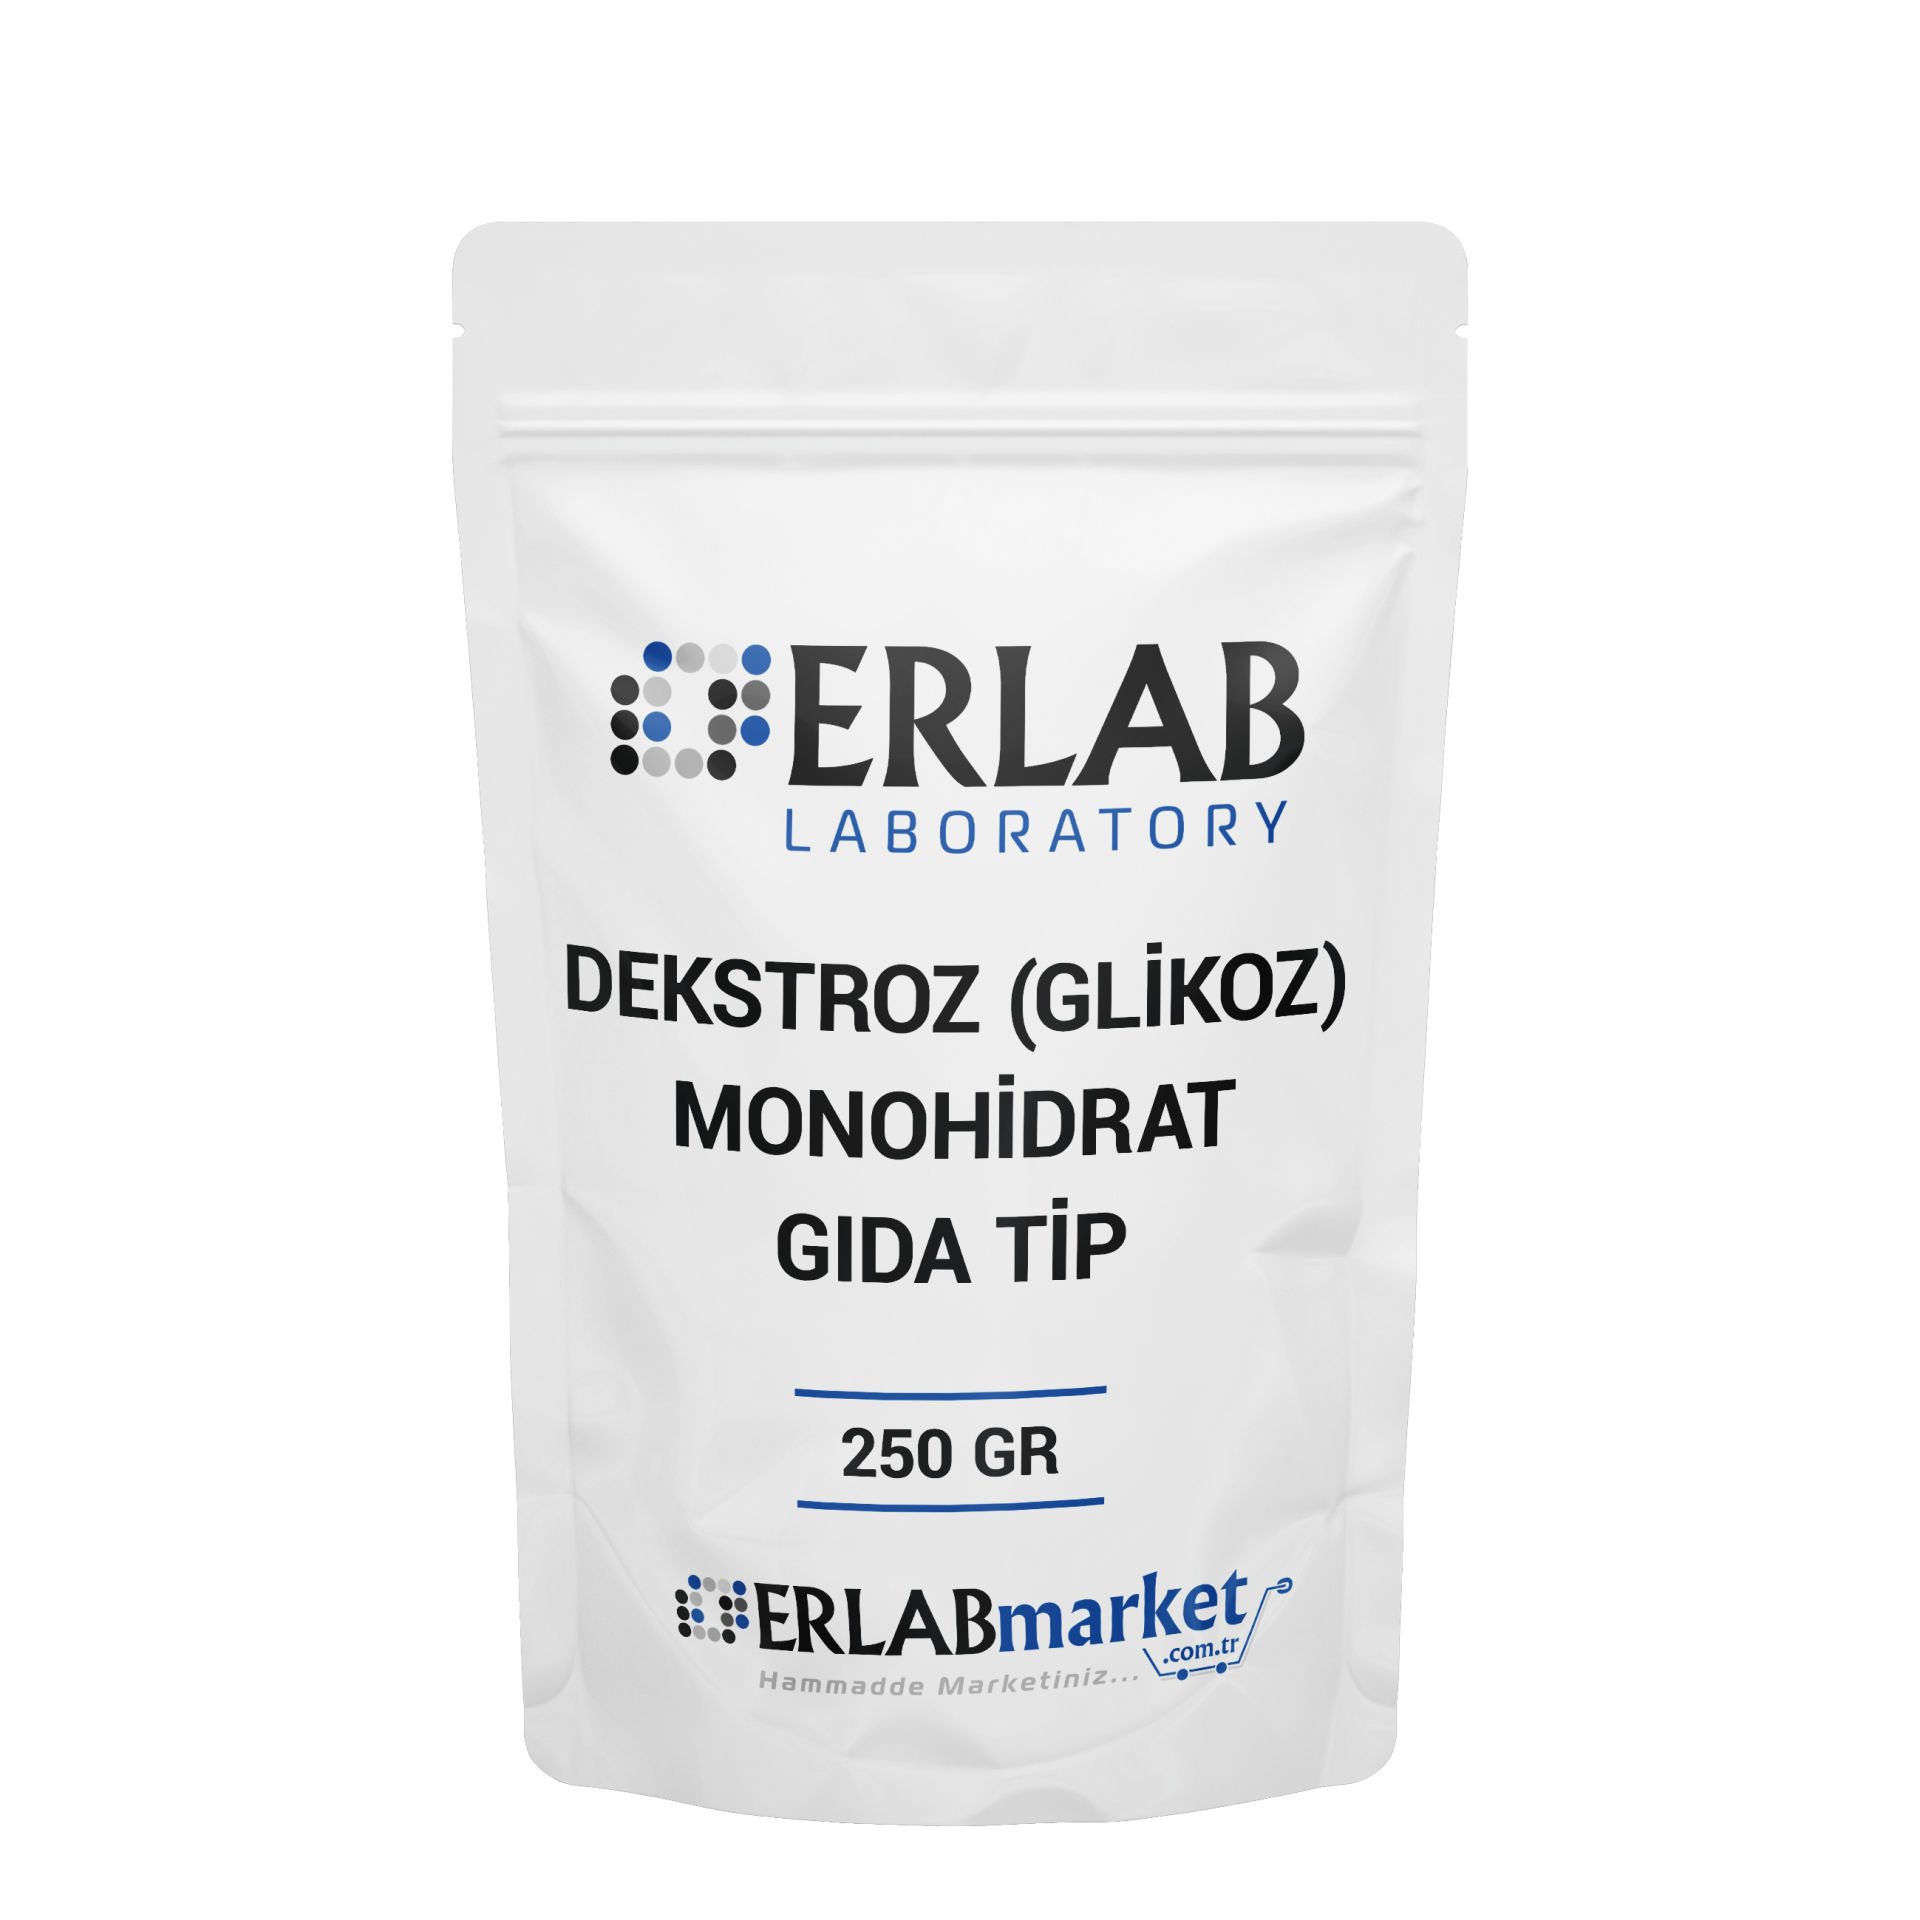 Glikoz Monohidrat - 250 GRAM  Dekstroz - Glucose monohydrate